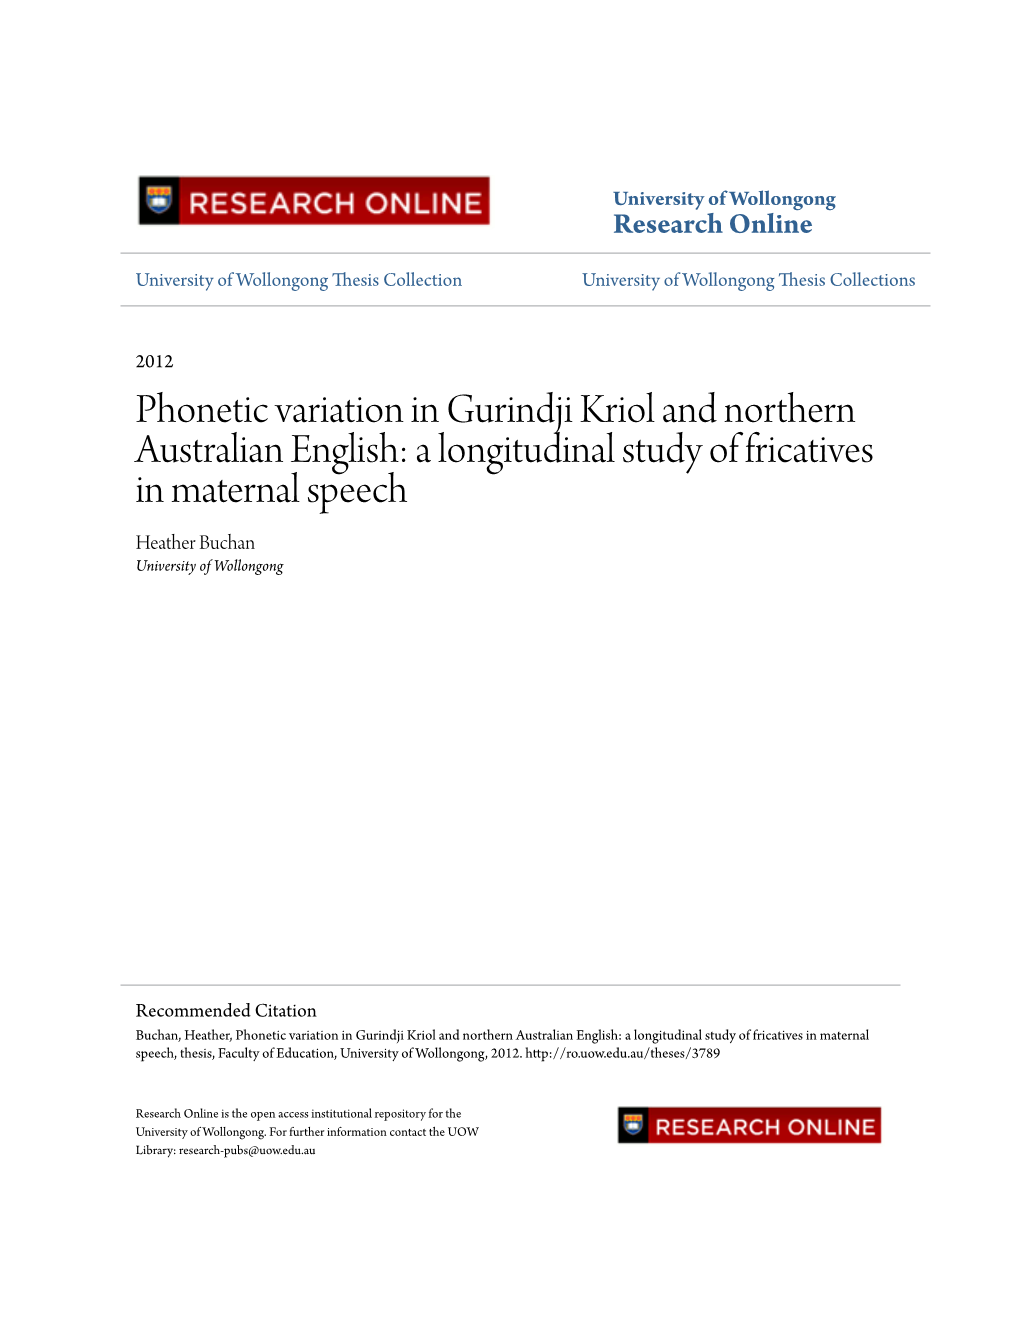 Phonetic Variation in Gurindji Kriol and Northern Australian English: a Longitudinal Study of Fricatives in Maternal Speech Heather Buchan University of Wollongong